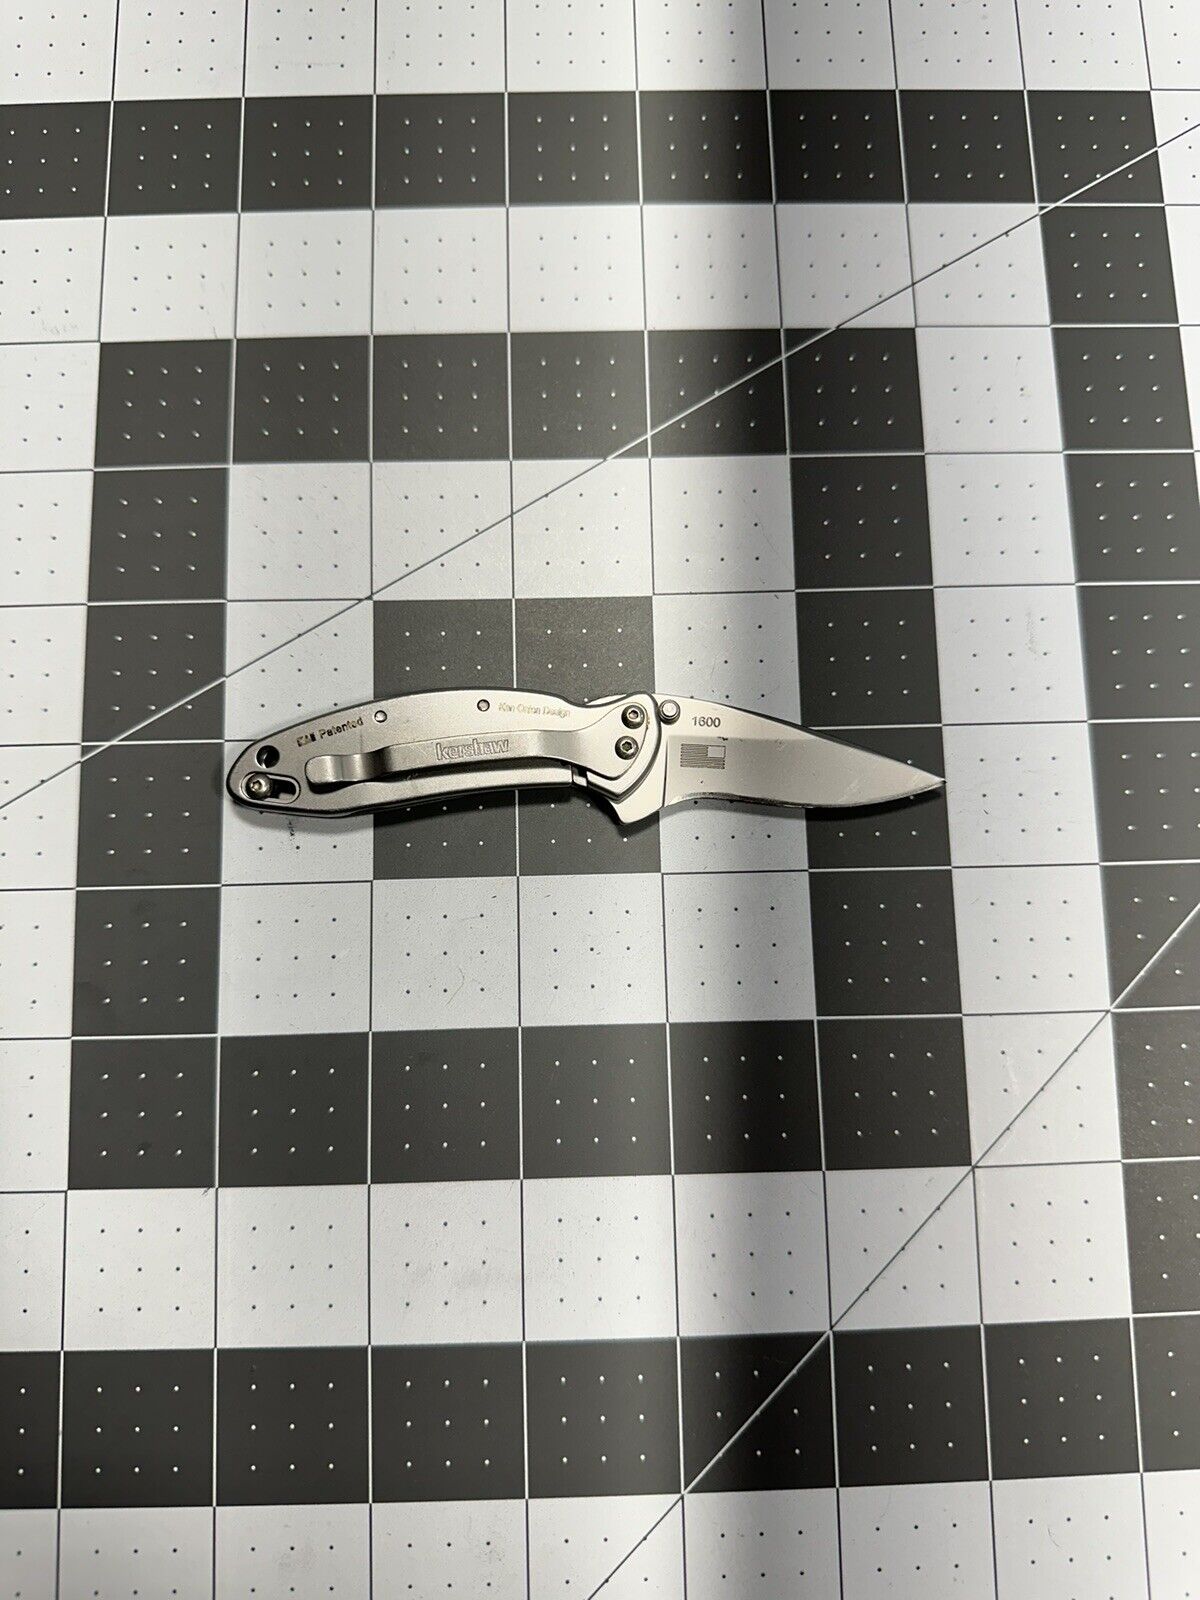 Kershaw 1600 Chive Pocket Knife USA - Silver - Flag - 6310